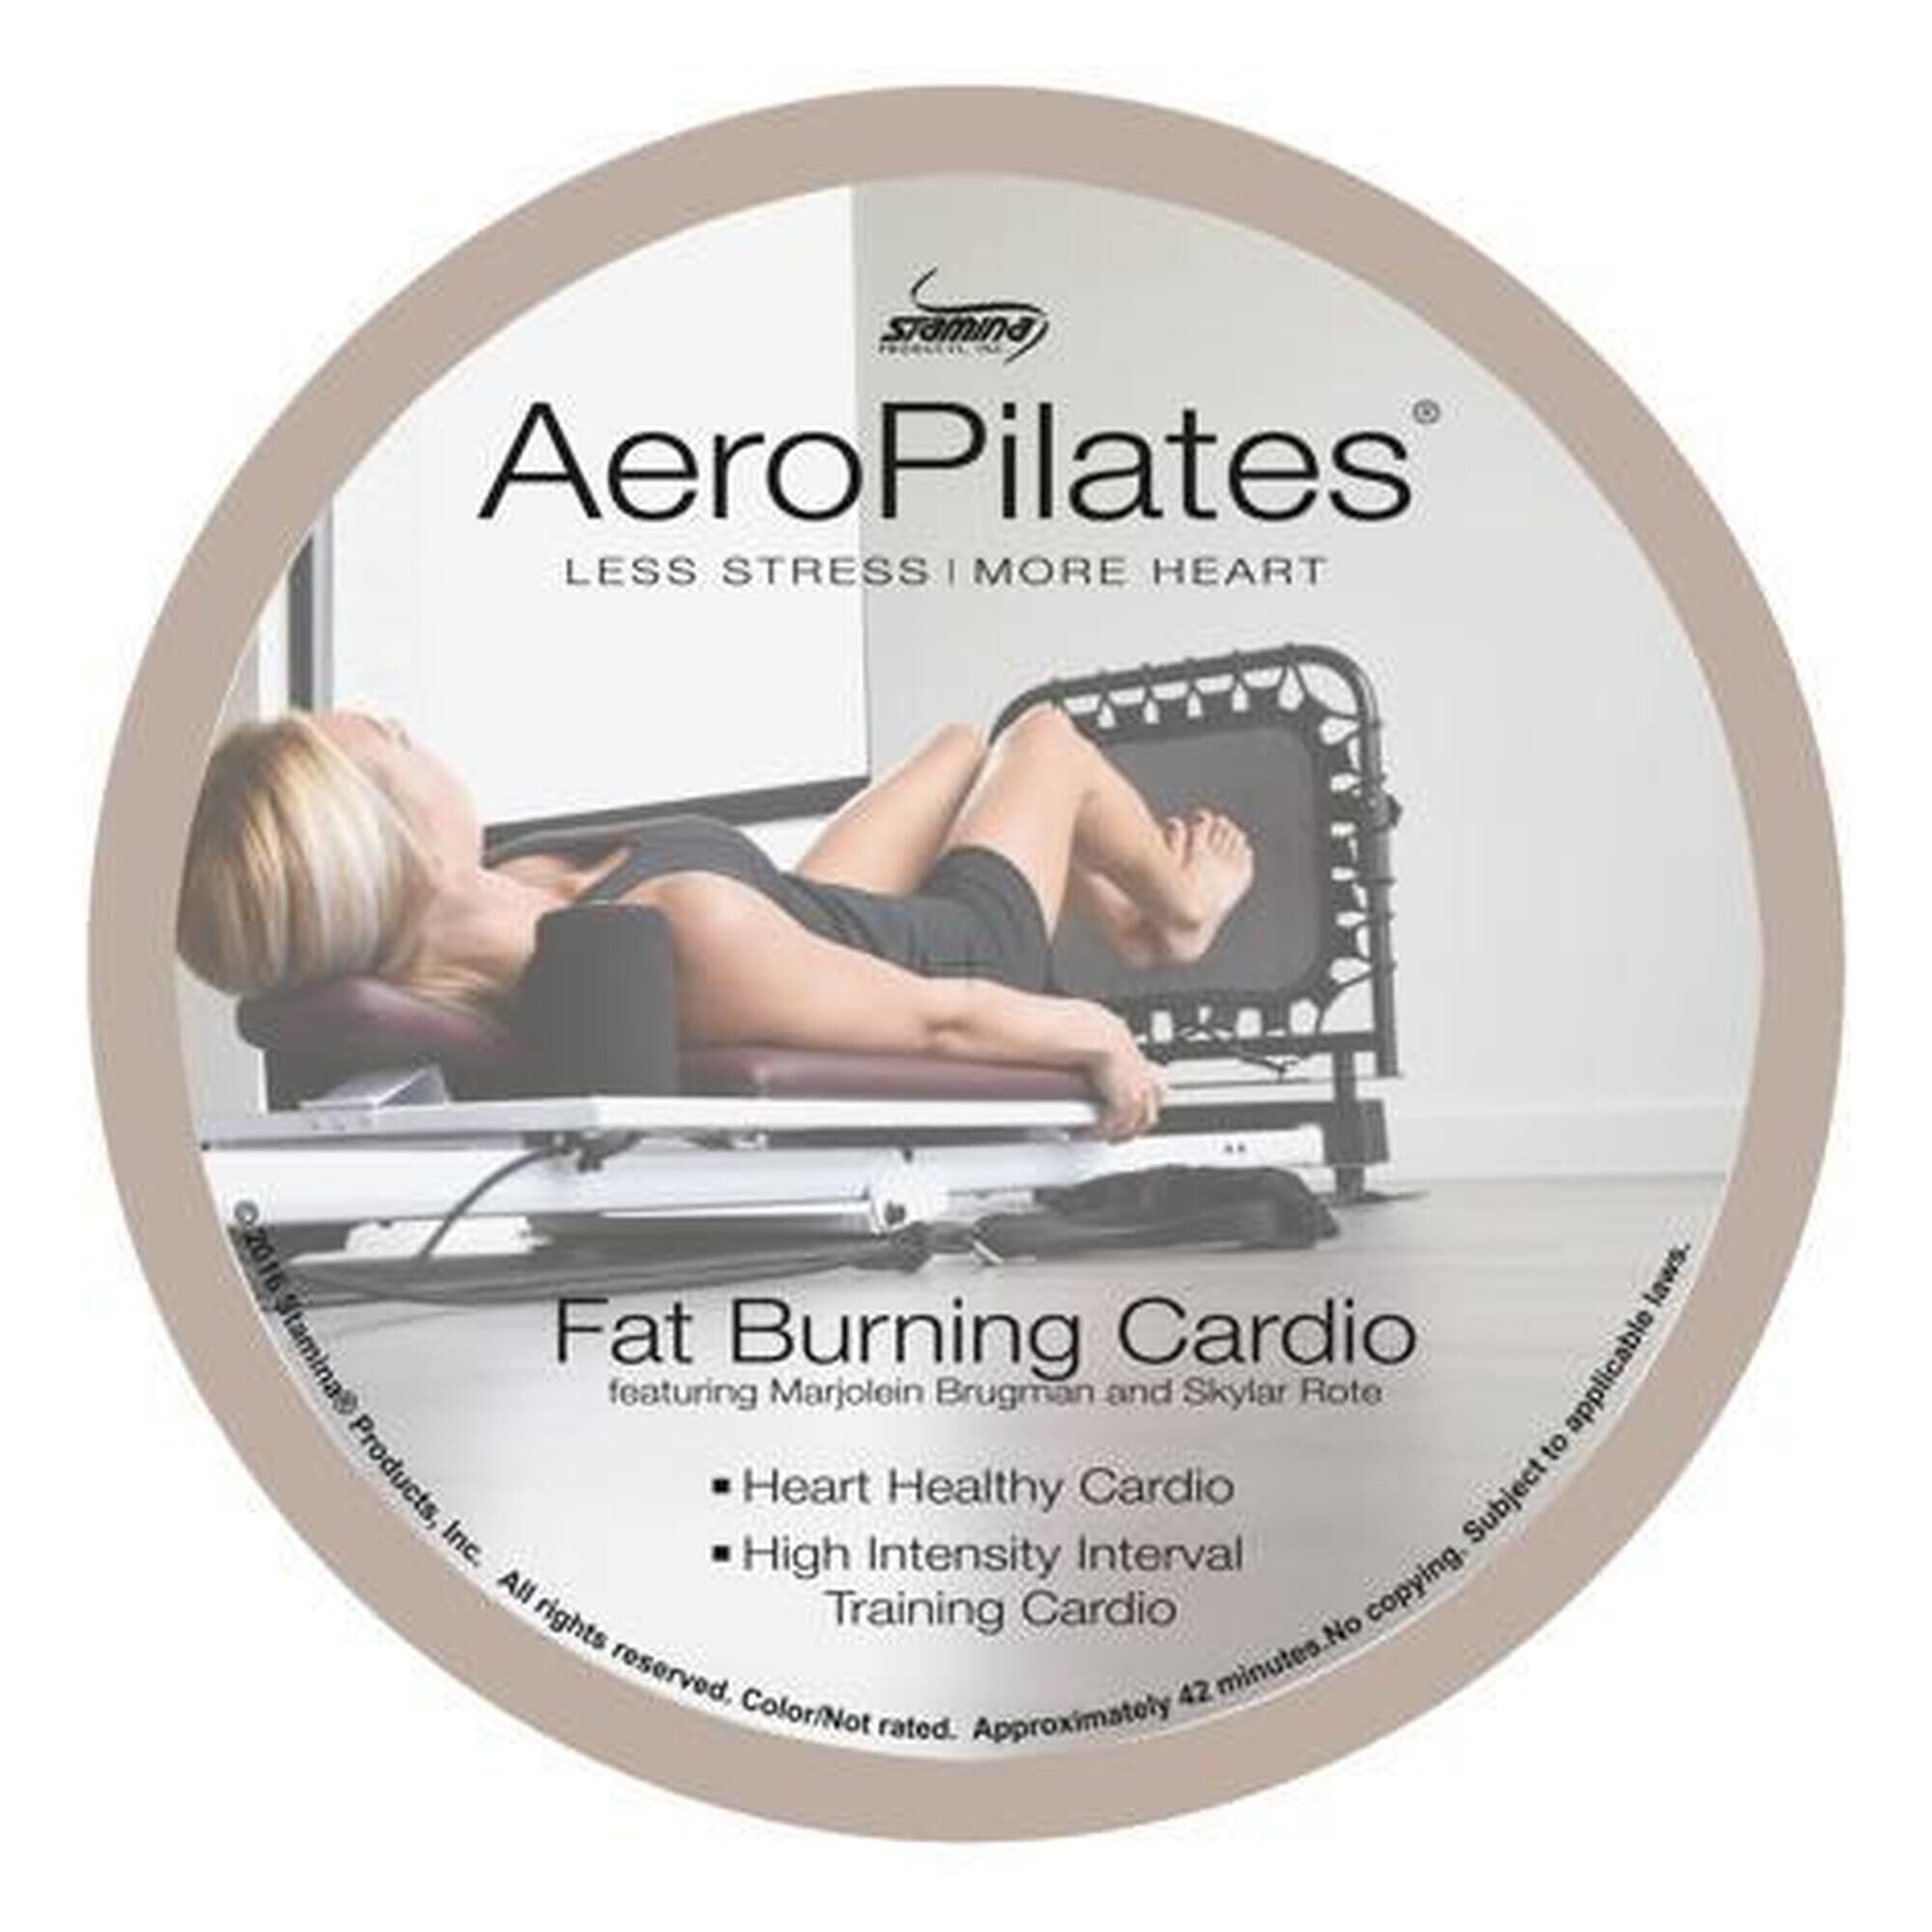 AEROPILATES Aeropilates Pilates Fat Burning Cardio Workout DVD